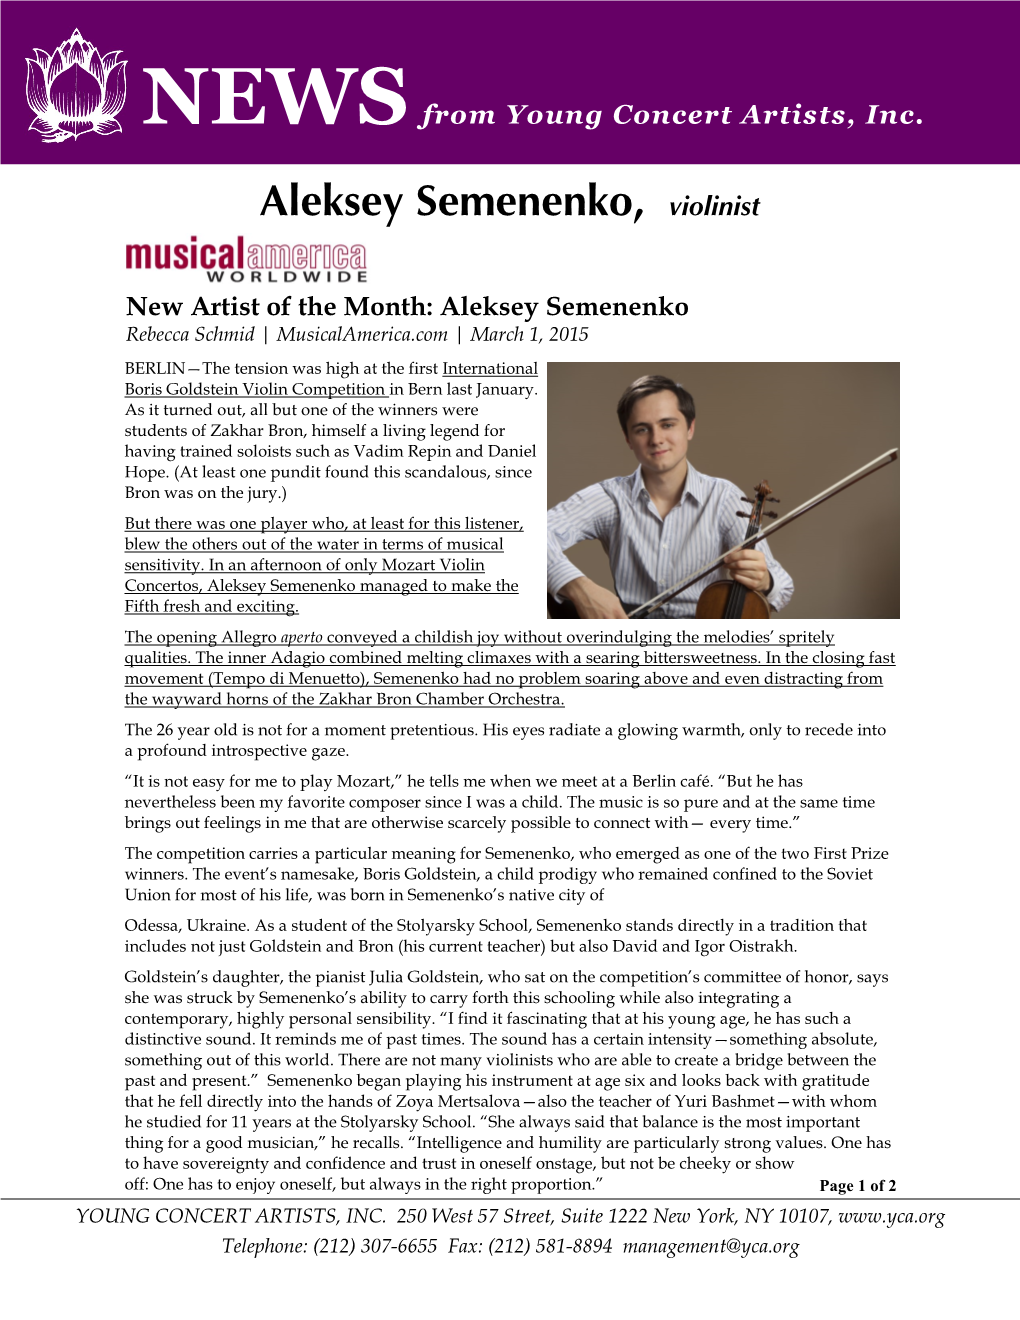 Aleksey Semenenko, Violinist